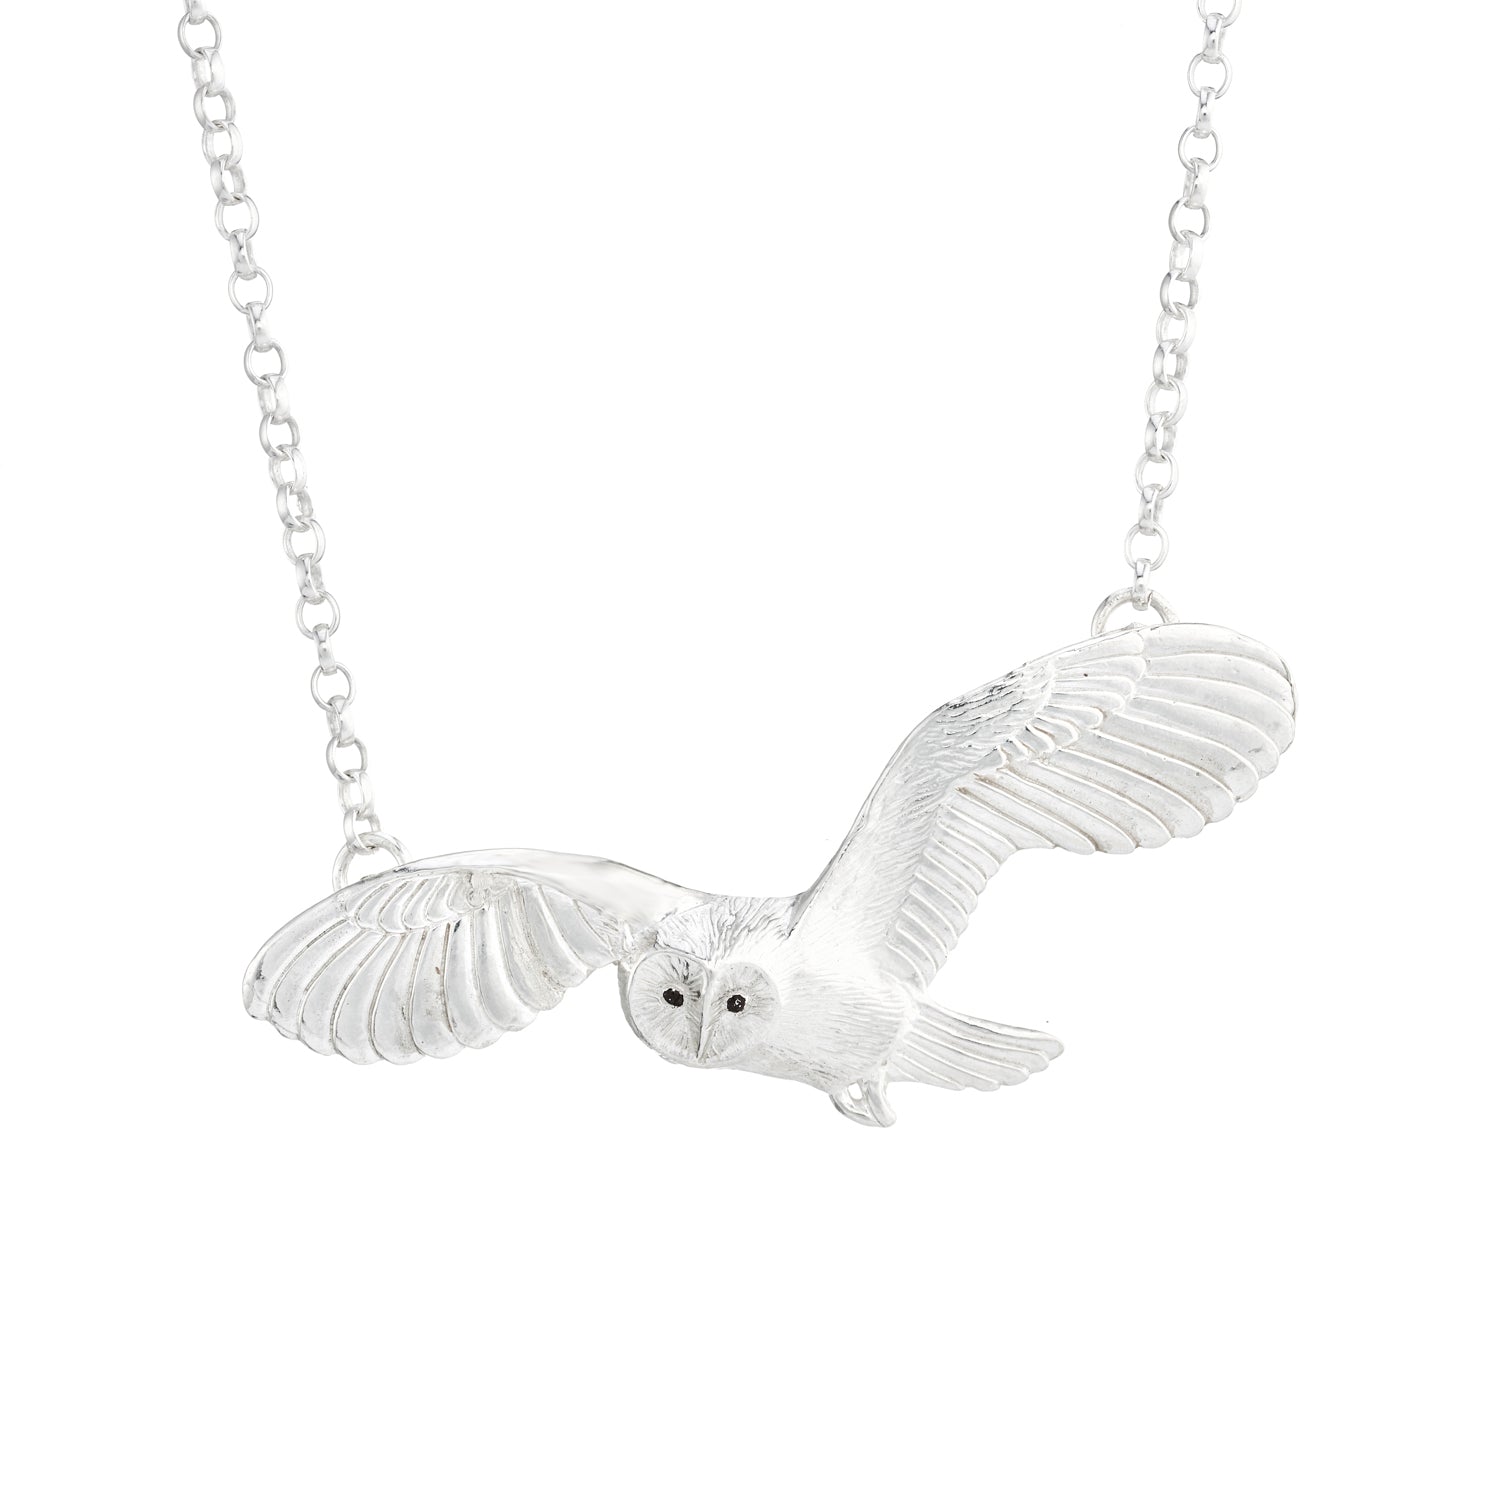 Owl in flight necklace